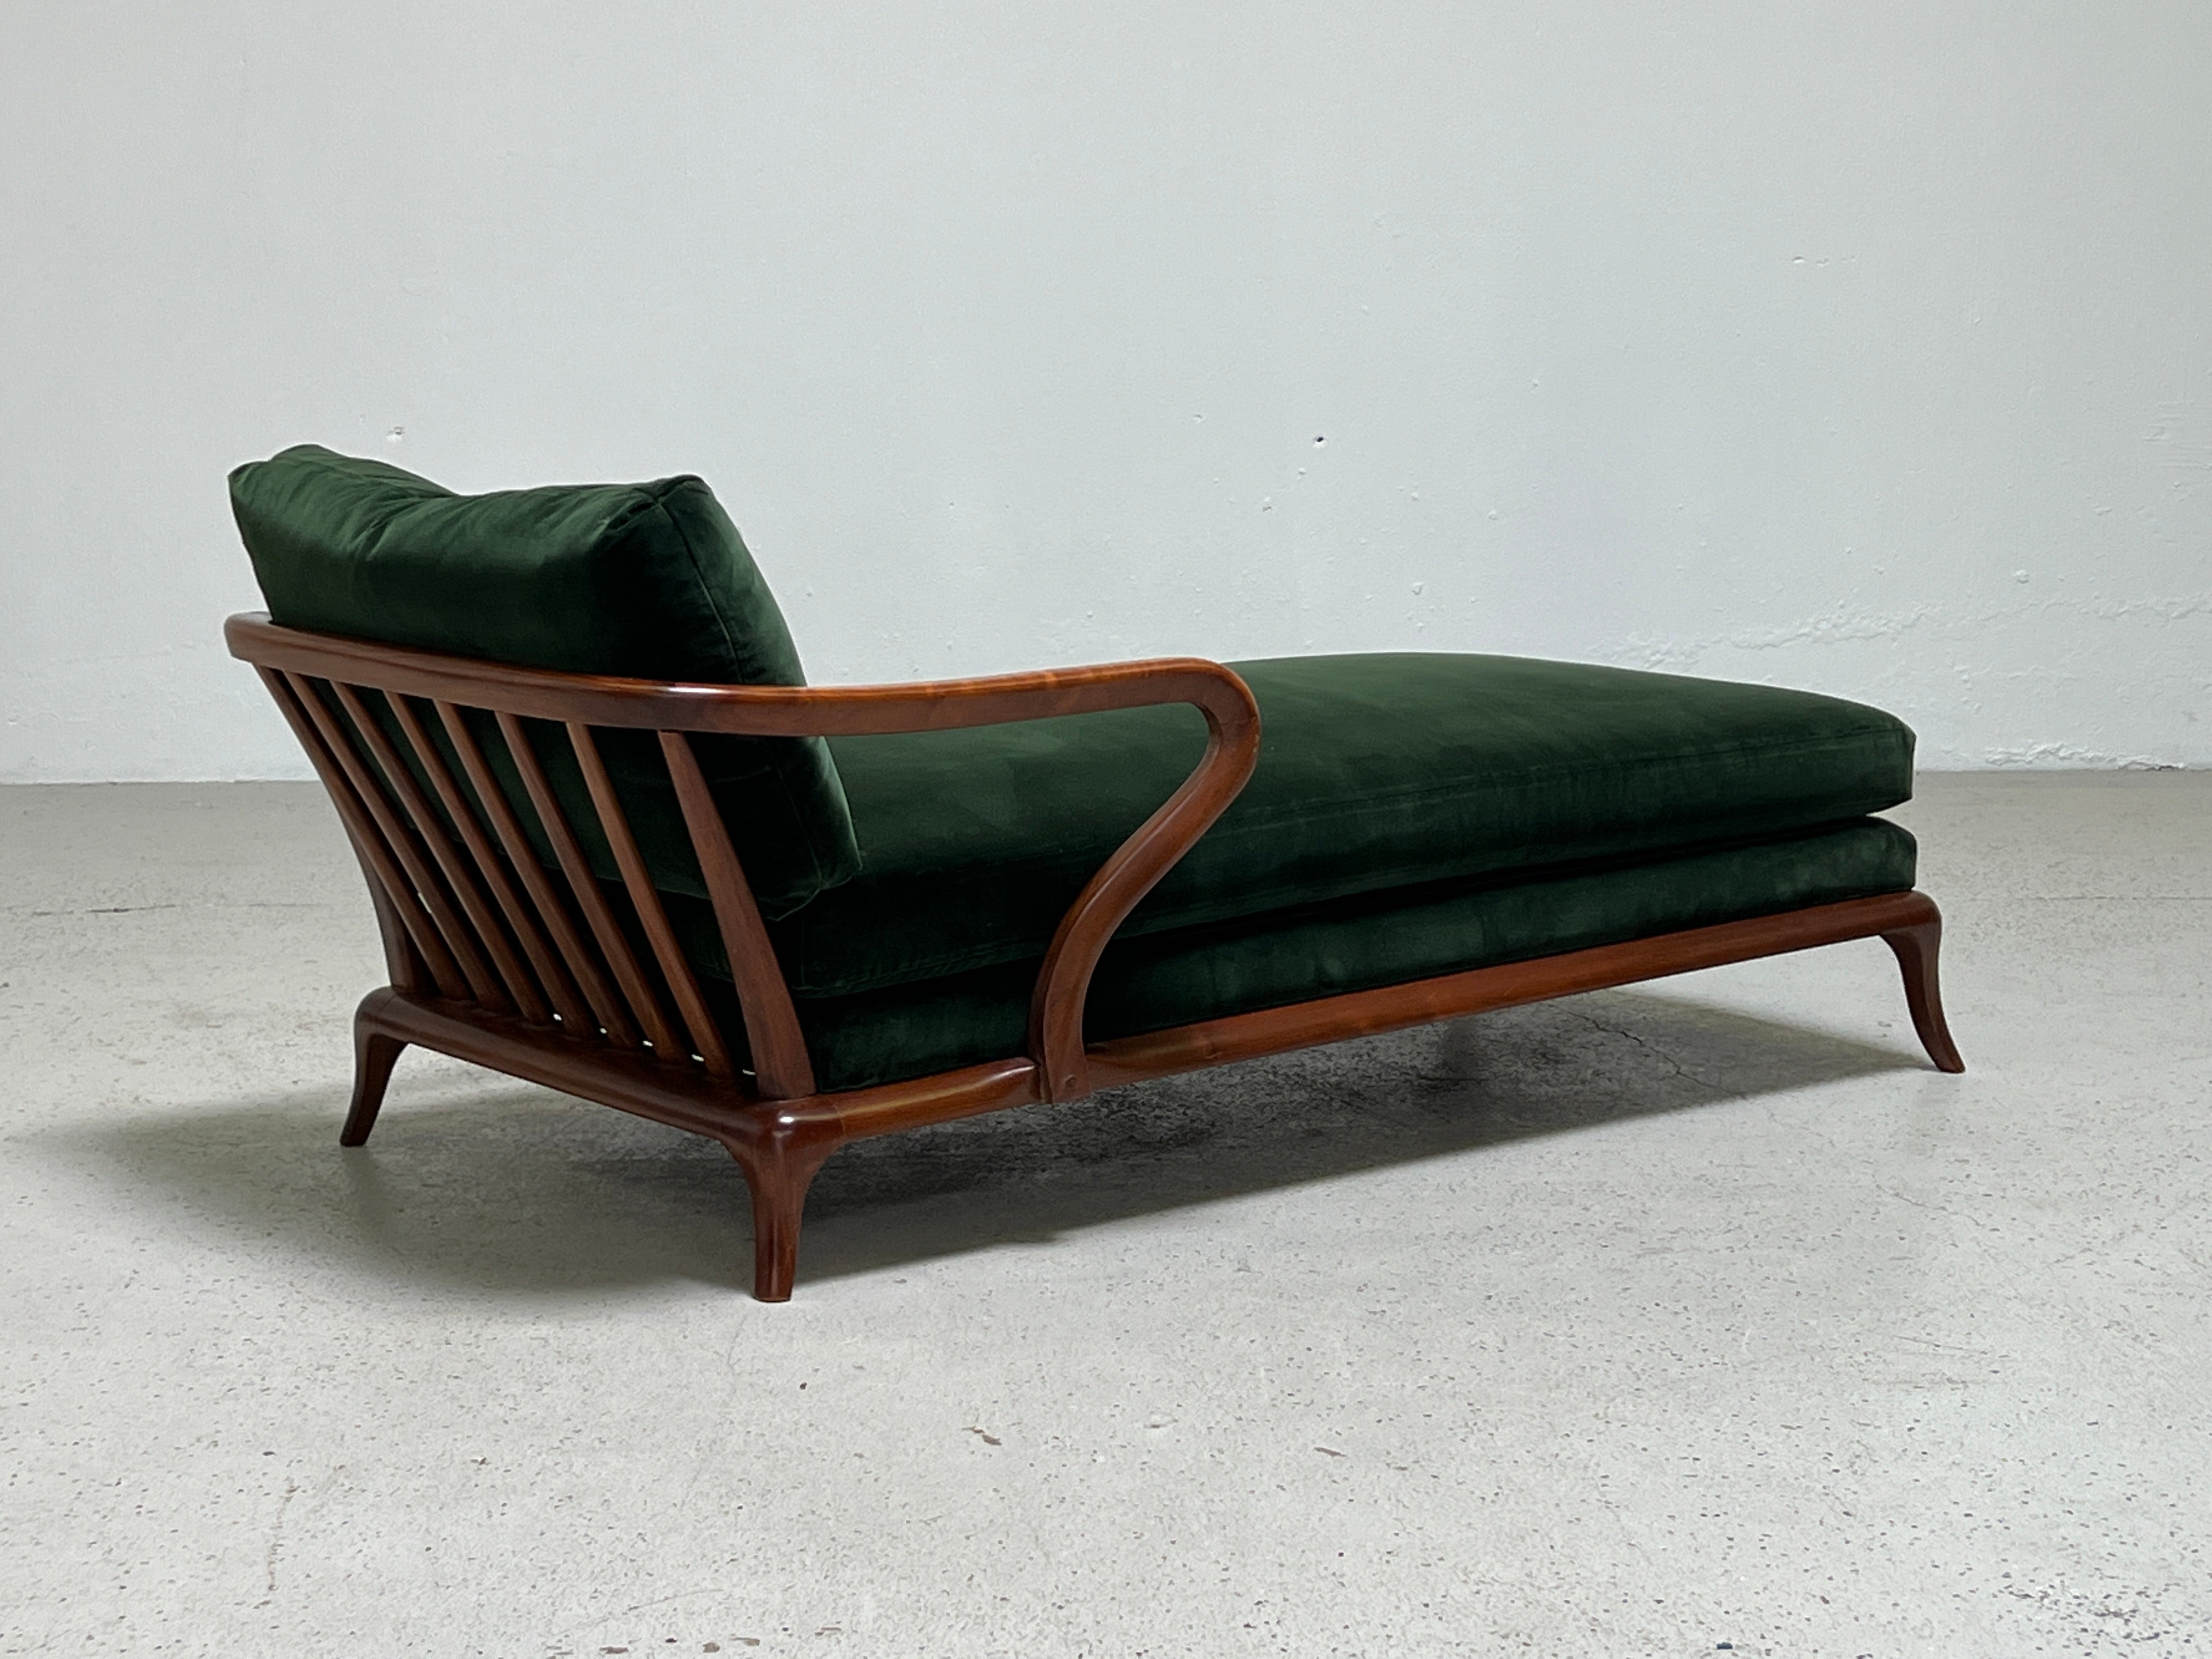 A sculptural walnut chaise lounge upholstered in green velvet.